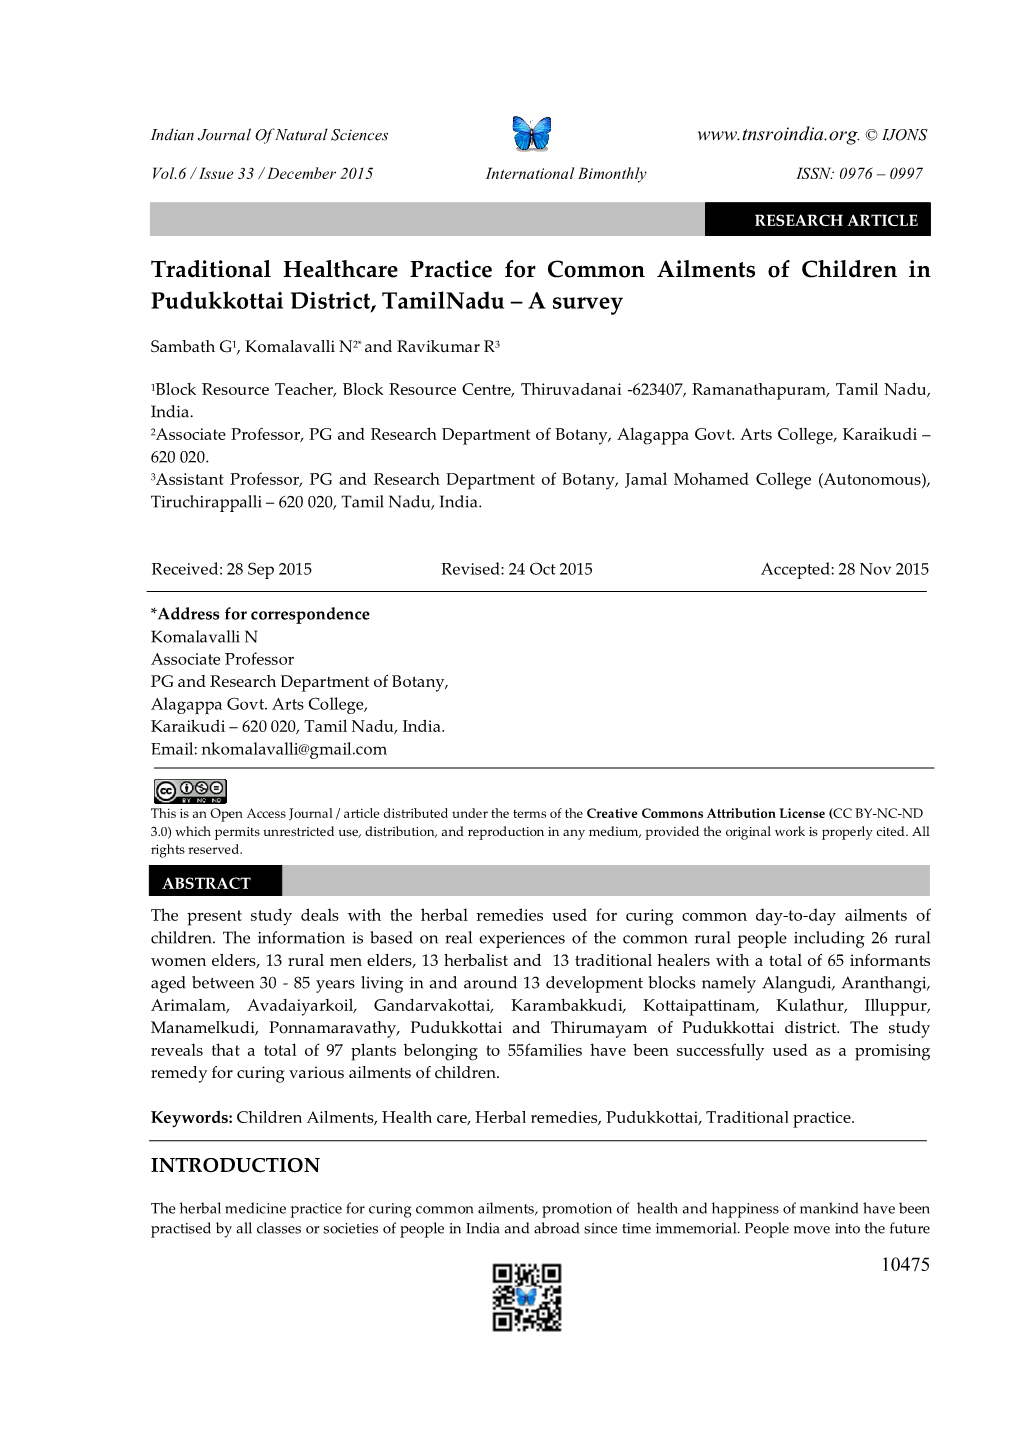 Traditional Healthcare Practice for Common Ailments of Children in Pudukkottai District, Tamilnadu – a Survey